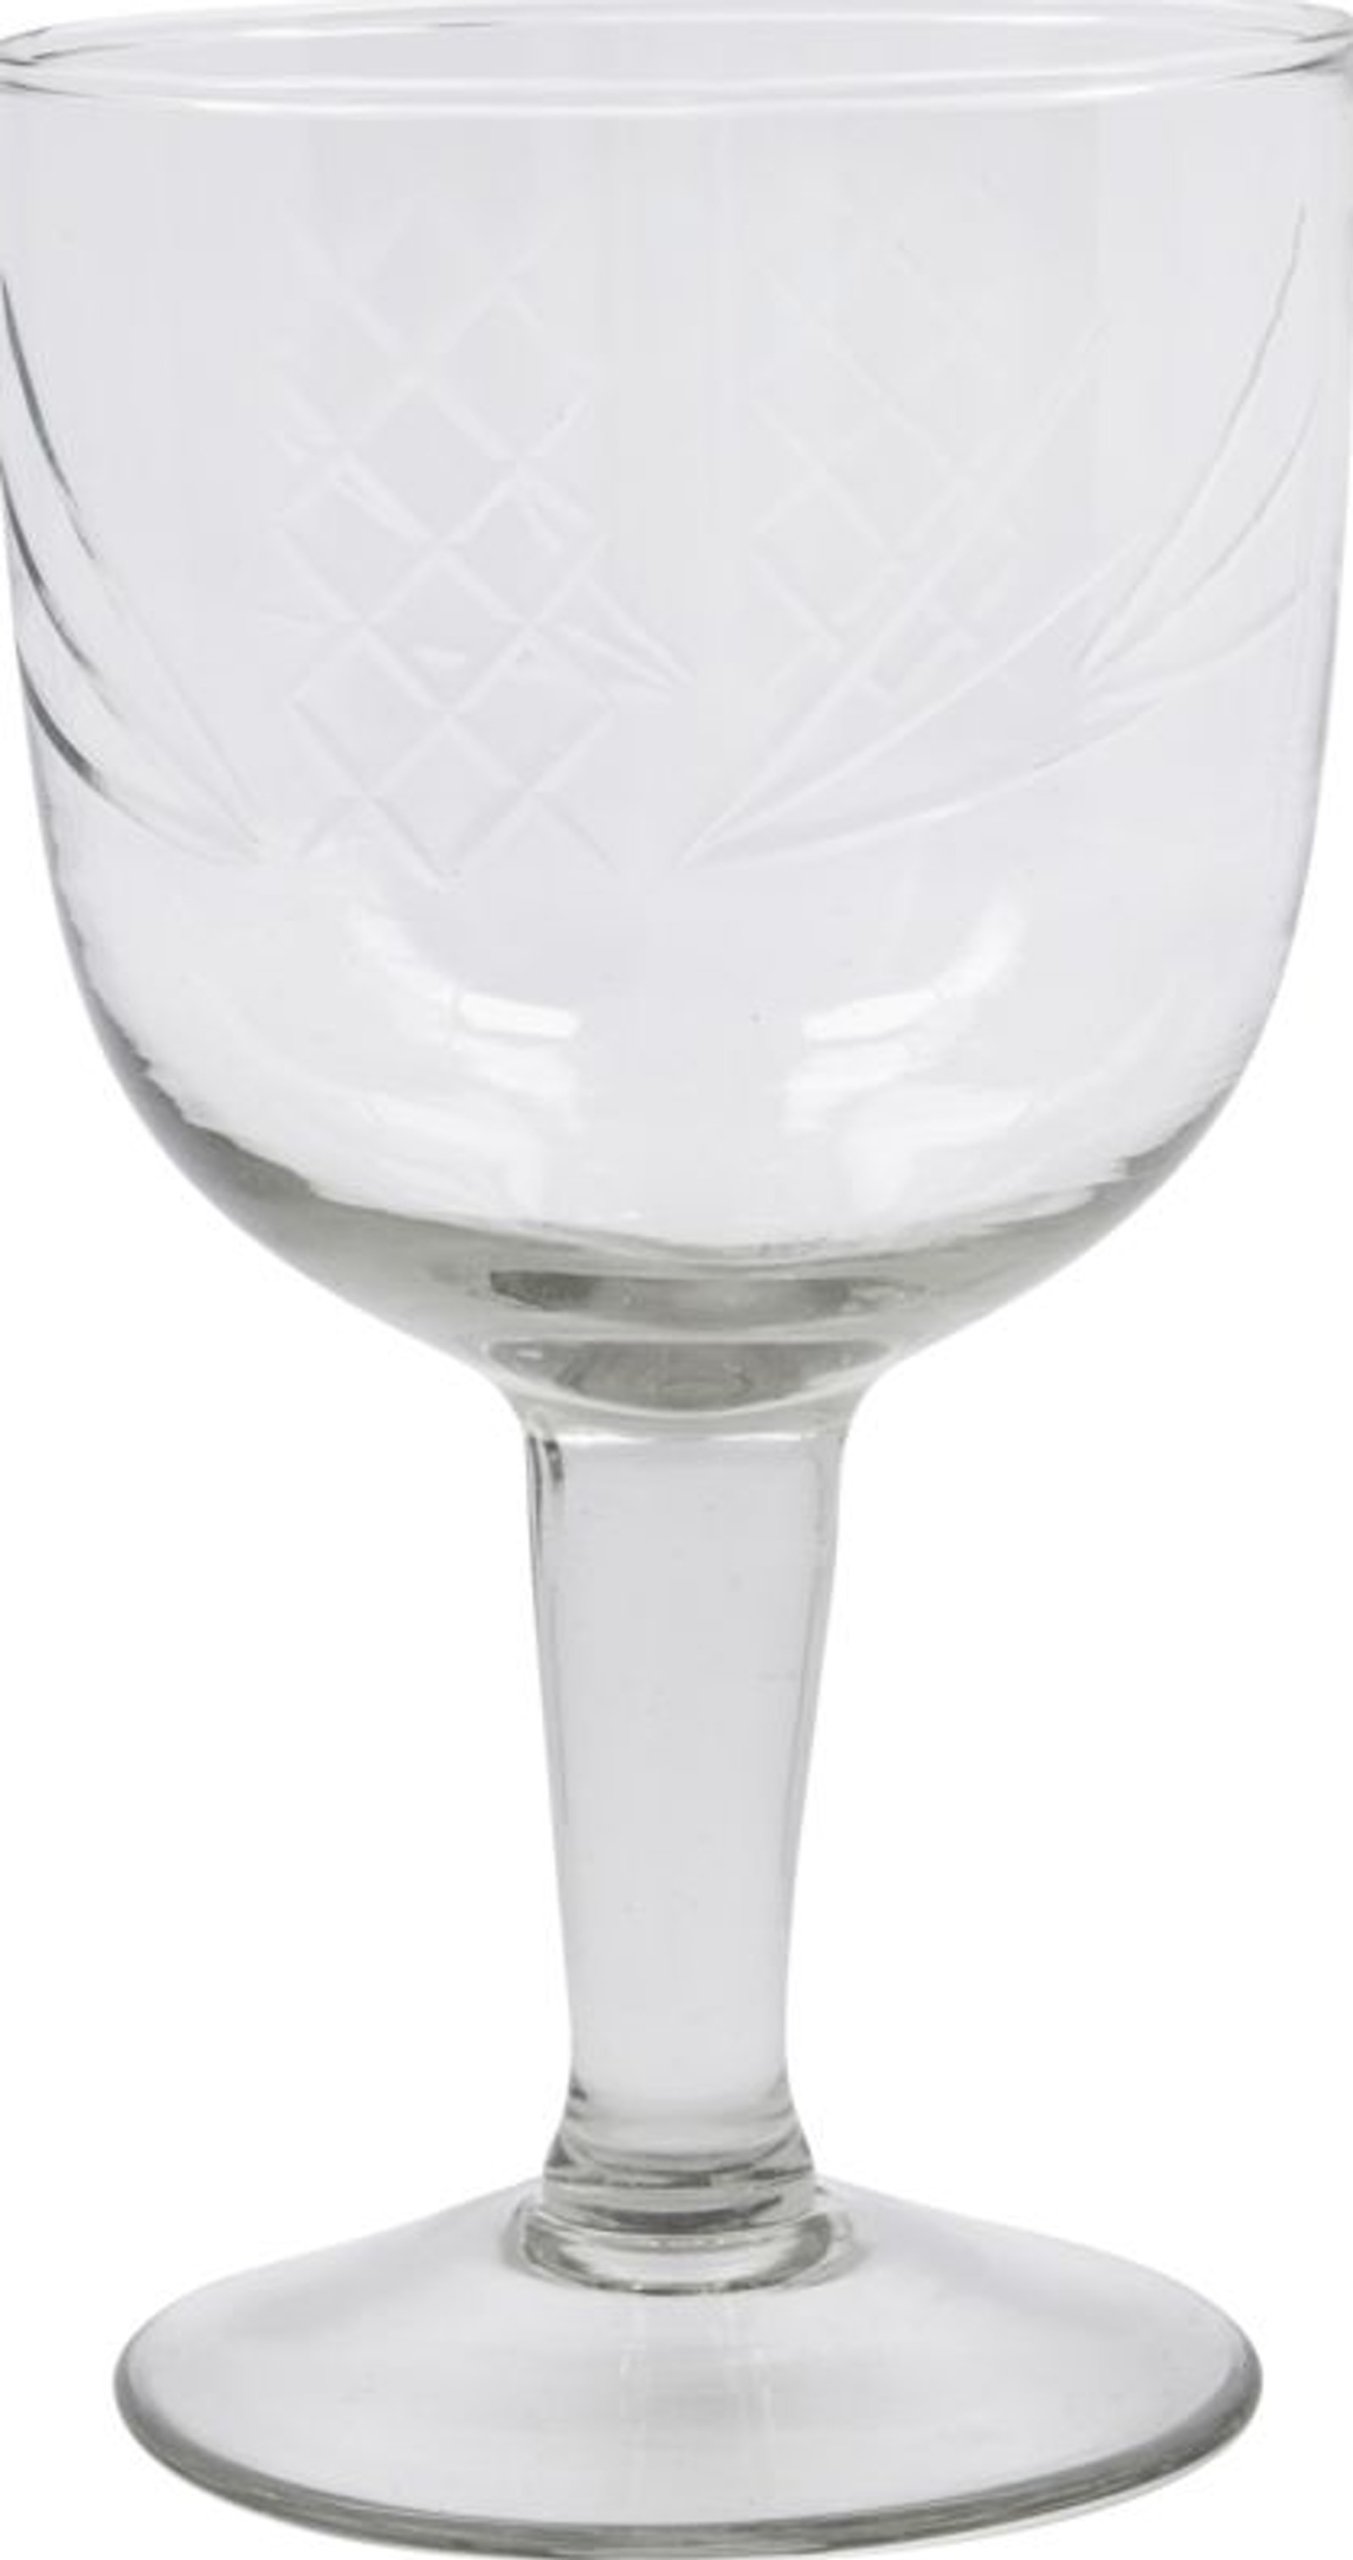 4: Crys, Cocktailglas by House Doctor (D: 10 cm. x H: 18 cm., Klar)